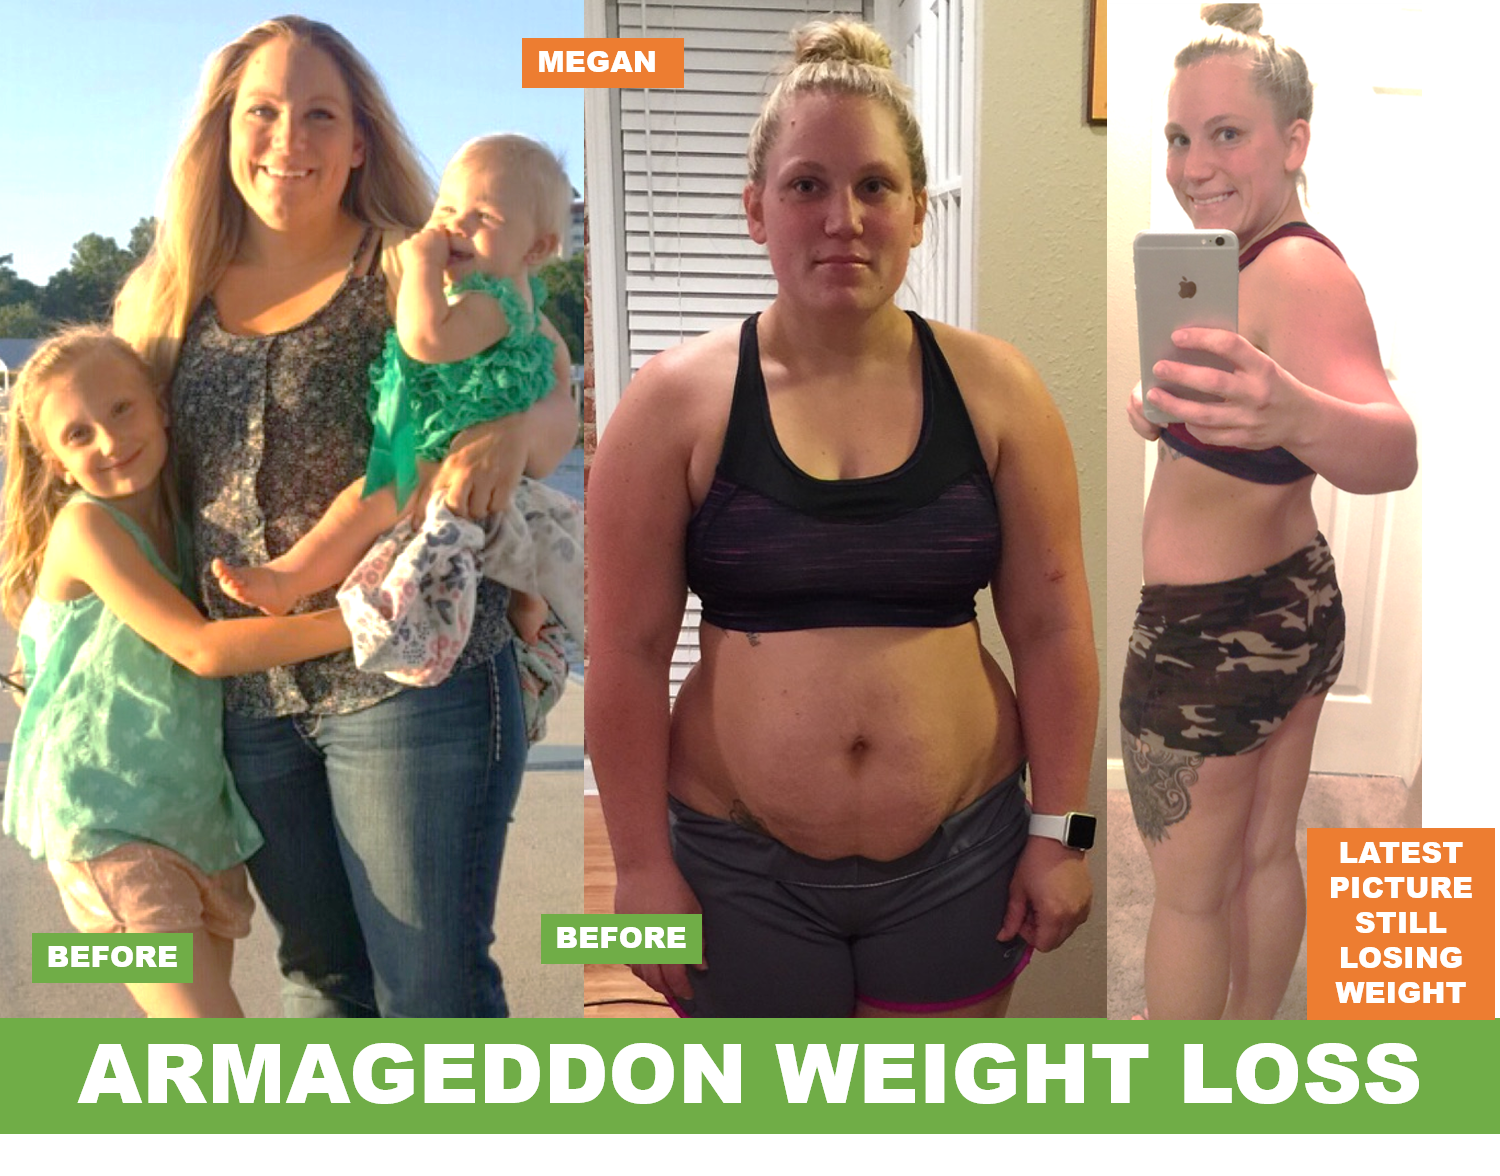 megan-green-florida-armageddon-weight-loss-program-best-weight-loss-dvd-for-women-post-pregnancy-weight-best-exercise-dvd-for-women-best-weight-loss-after-pregnant-2